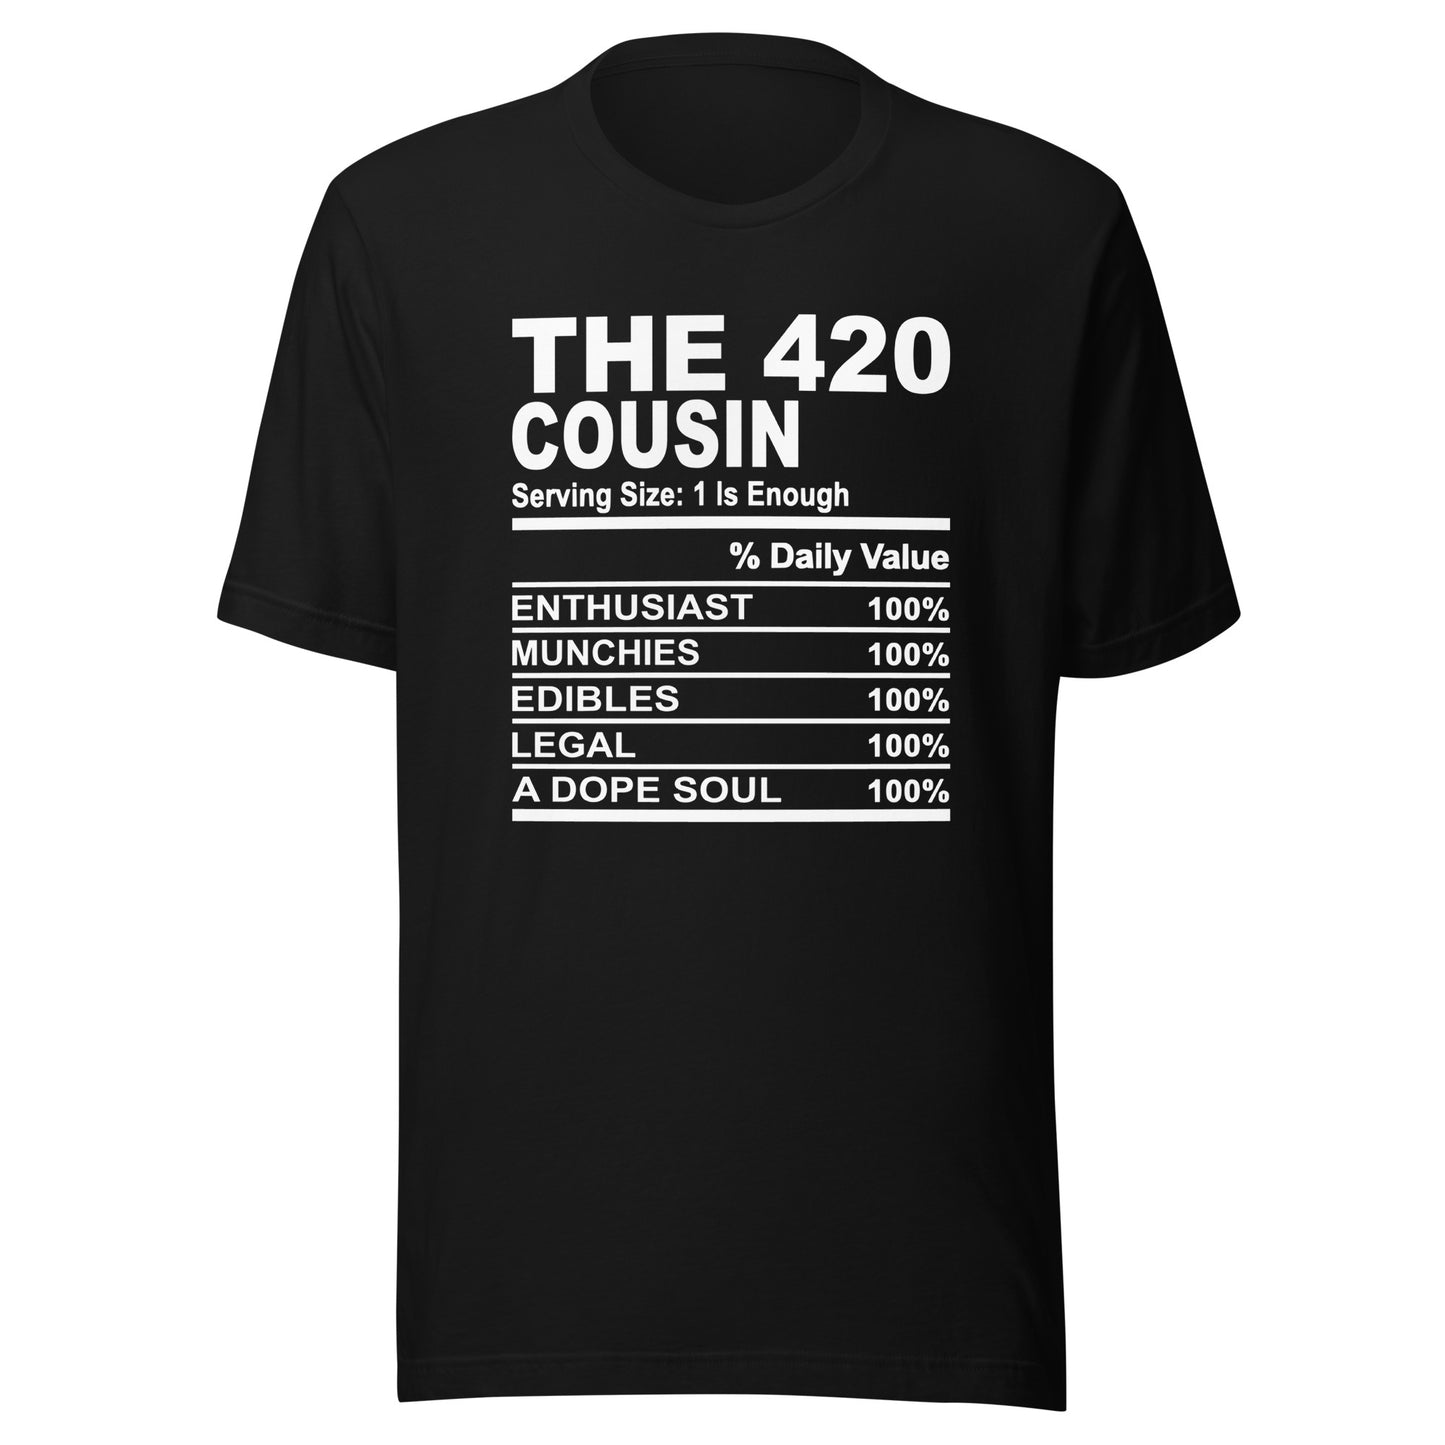 THE 420 COUSIN - 2XL-3XL - Unisex T-Shirt (white print)